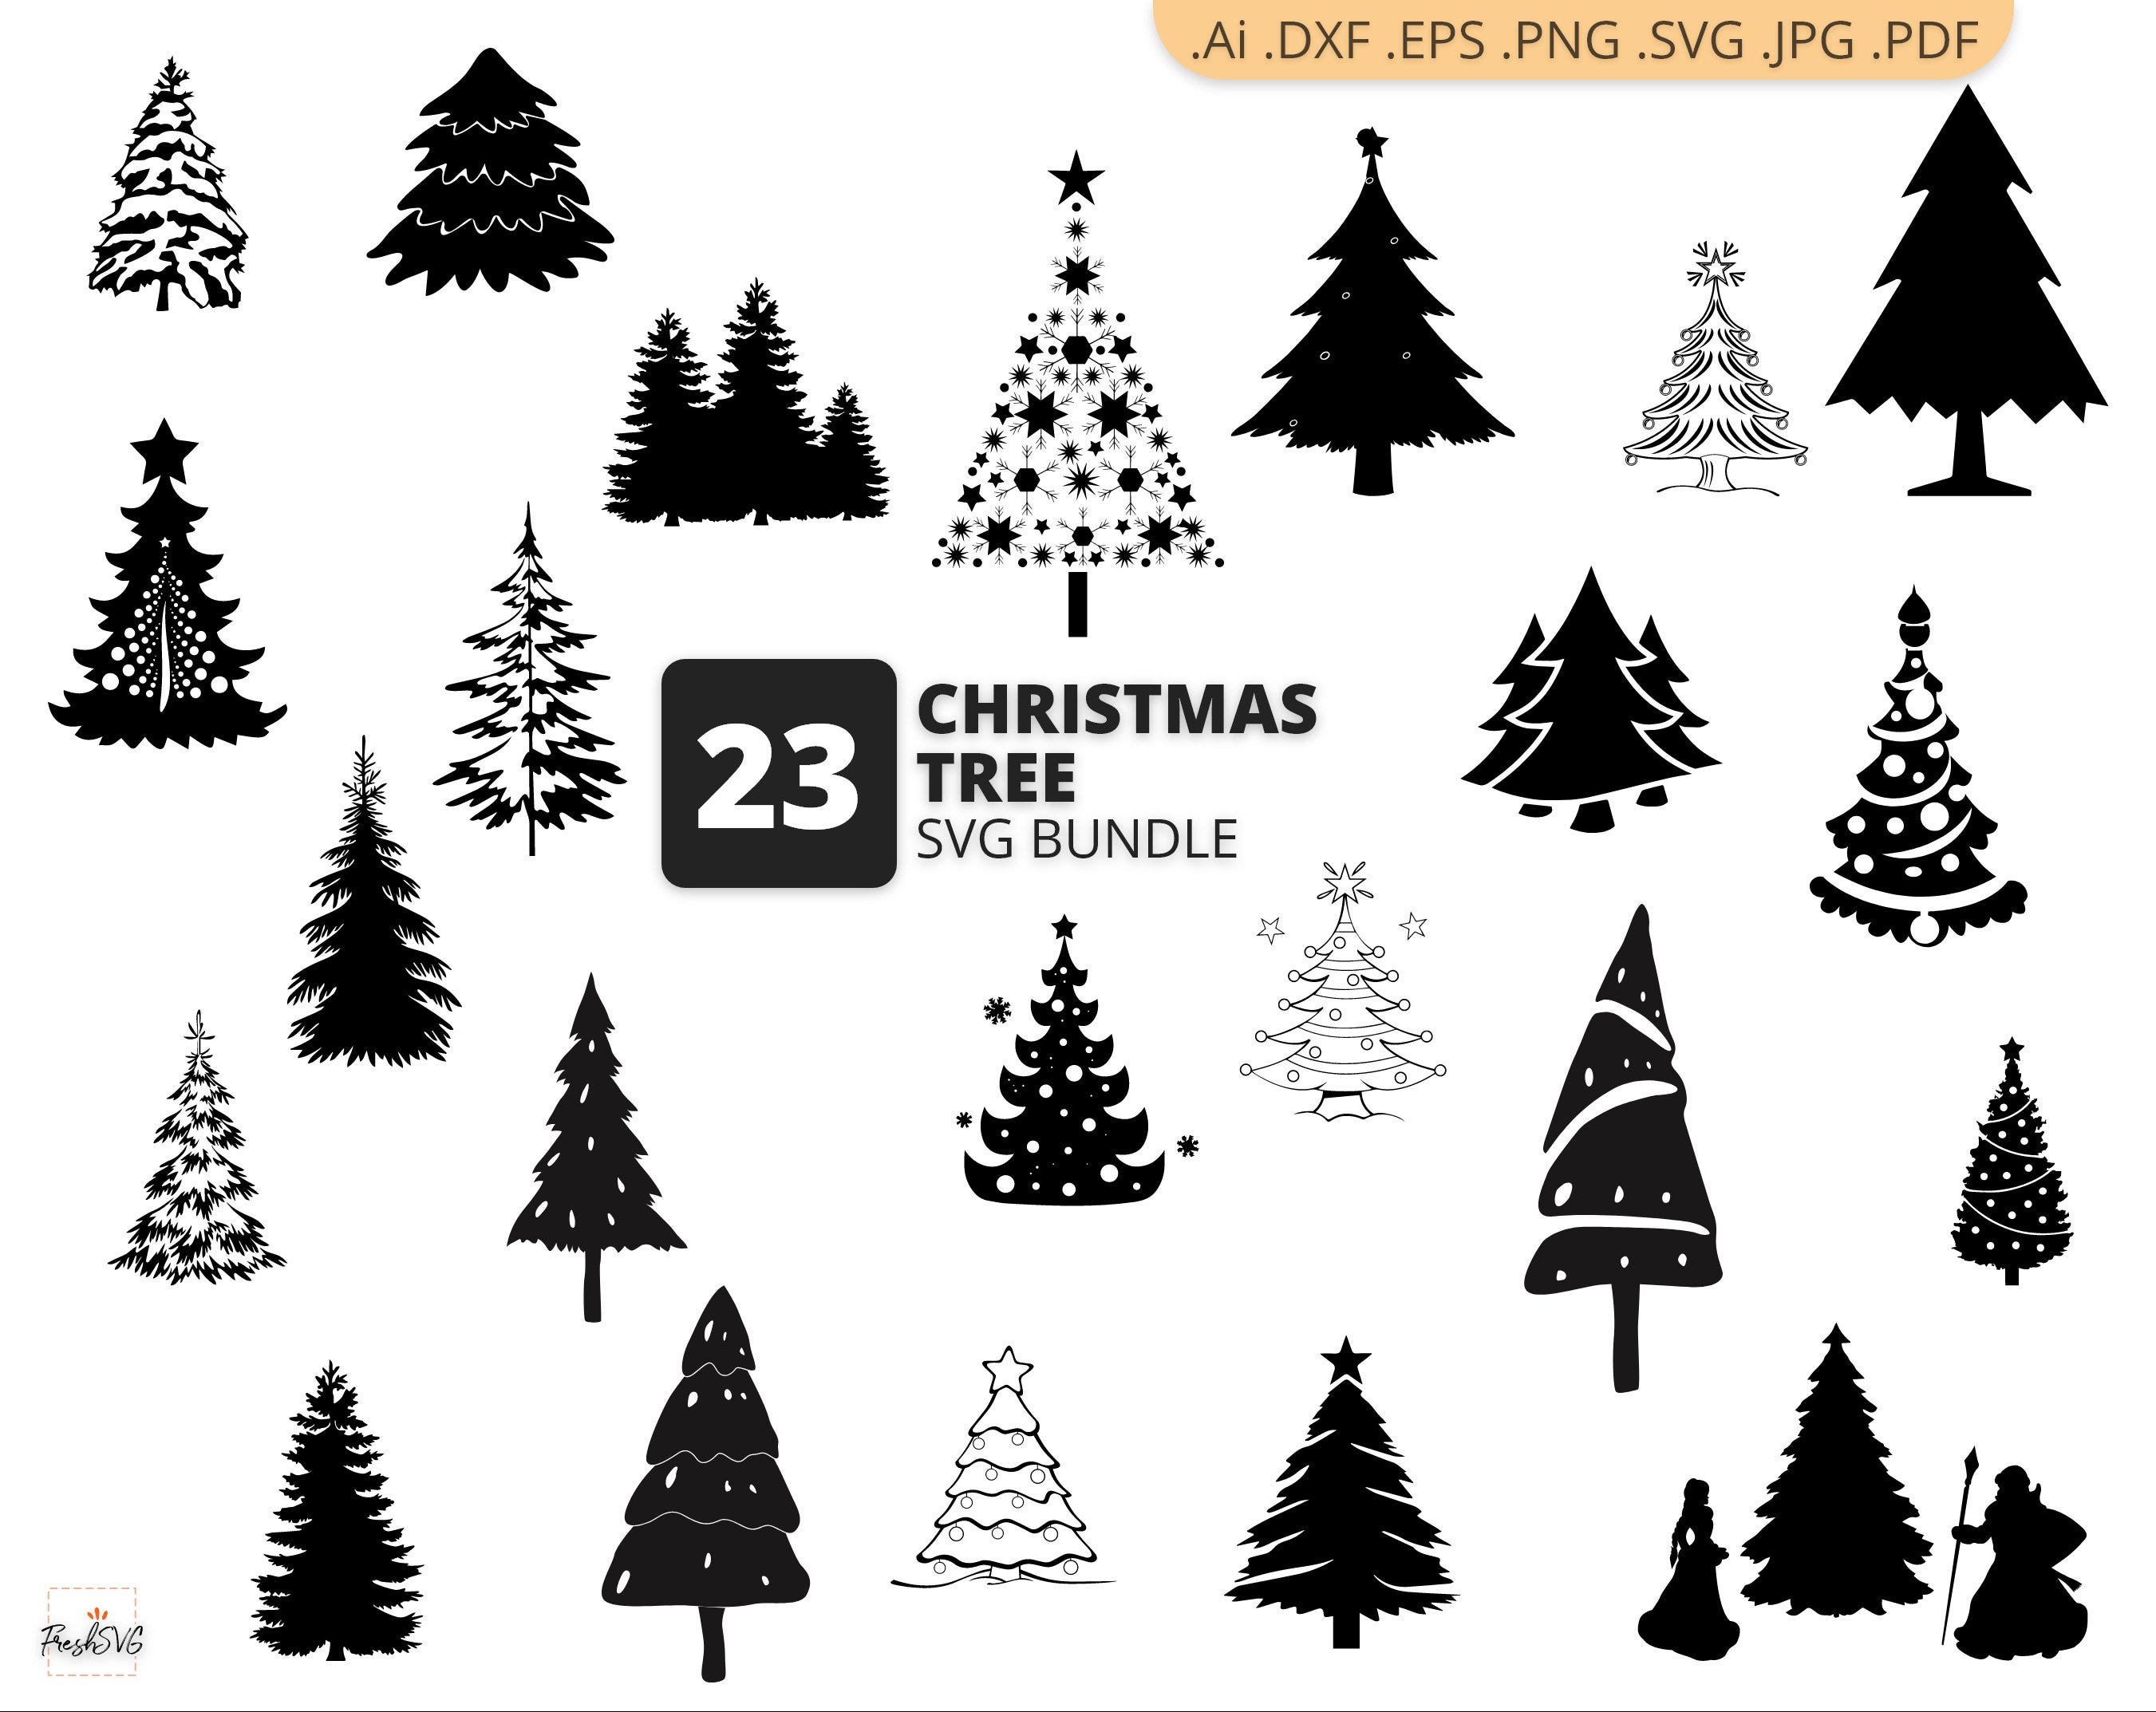 Christmas Tree SVG, Christmas Tree Bundle SVG, Christmas Tree Silhouette, Christmas Tree Clipart, Digital File, Cricut Svg file